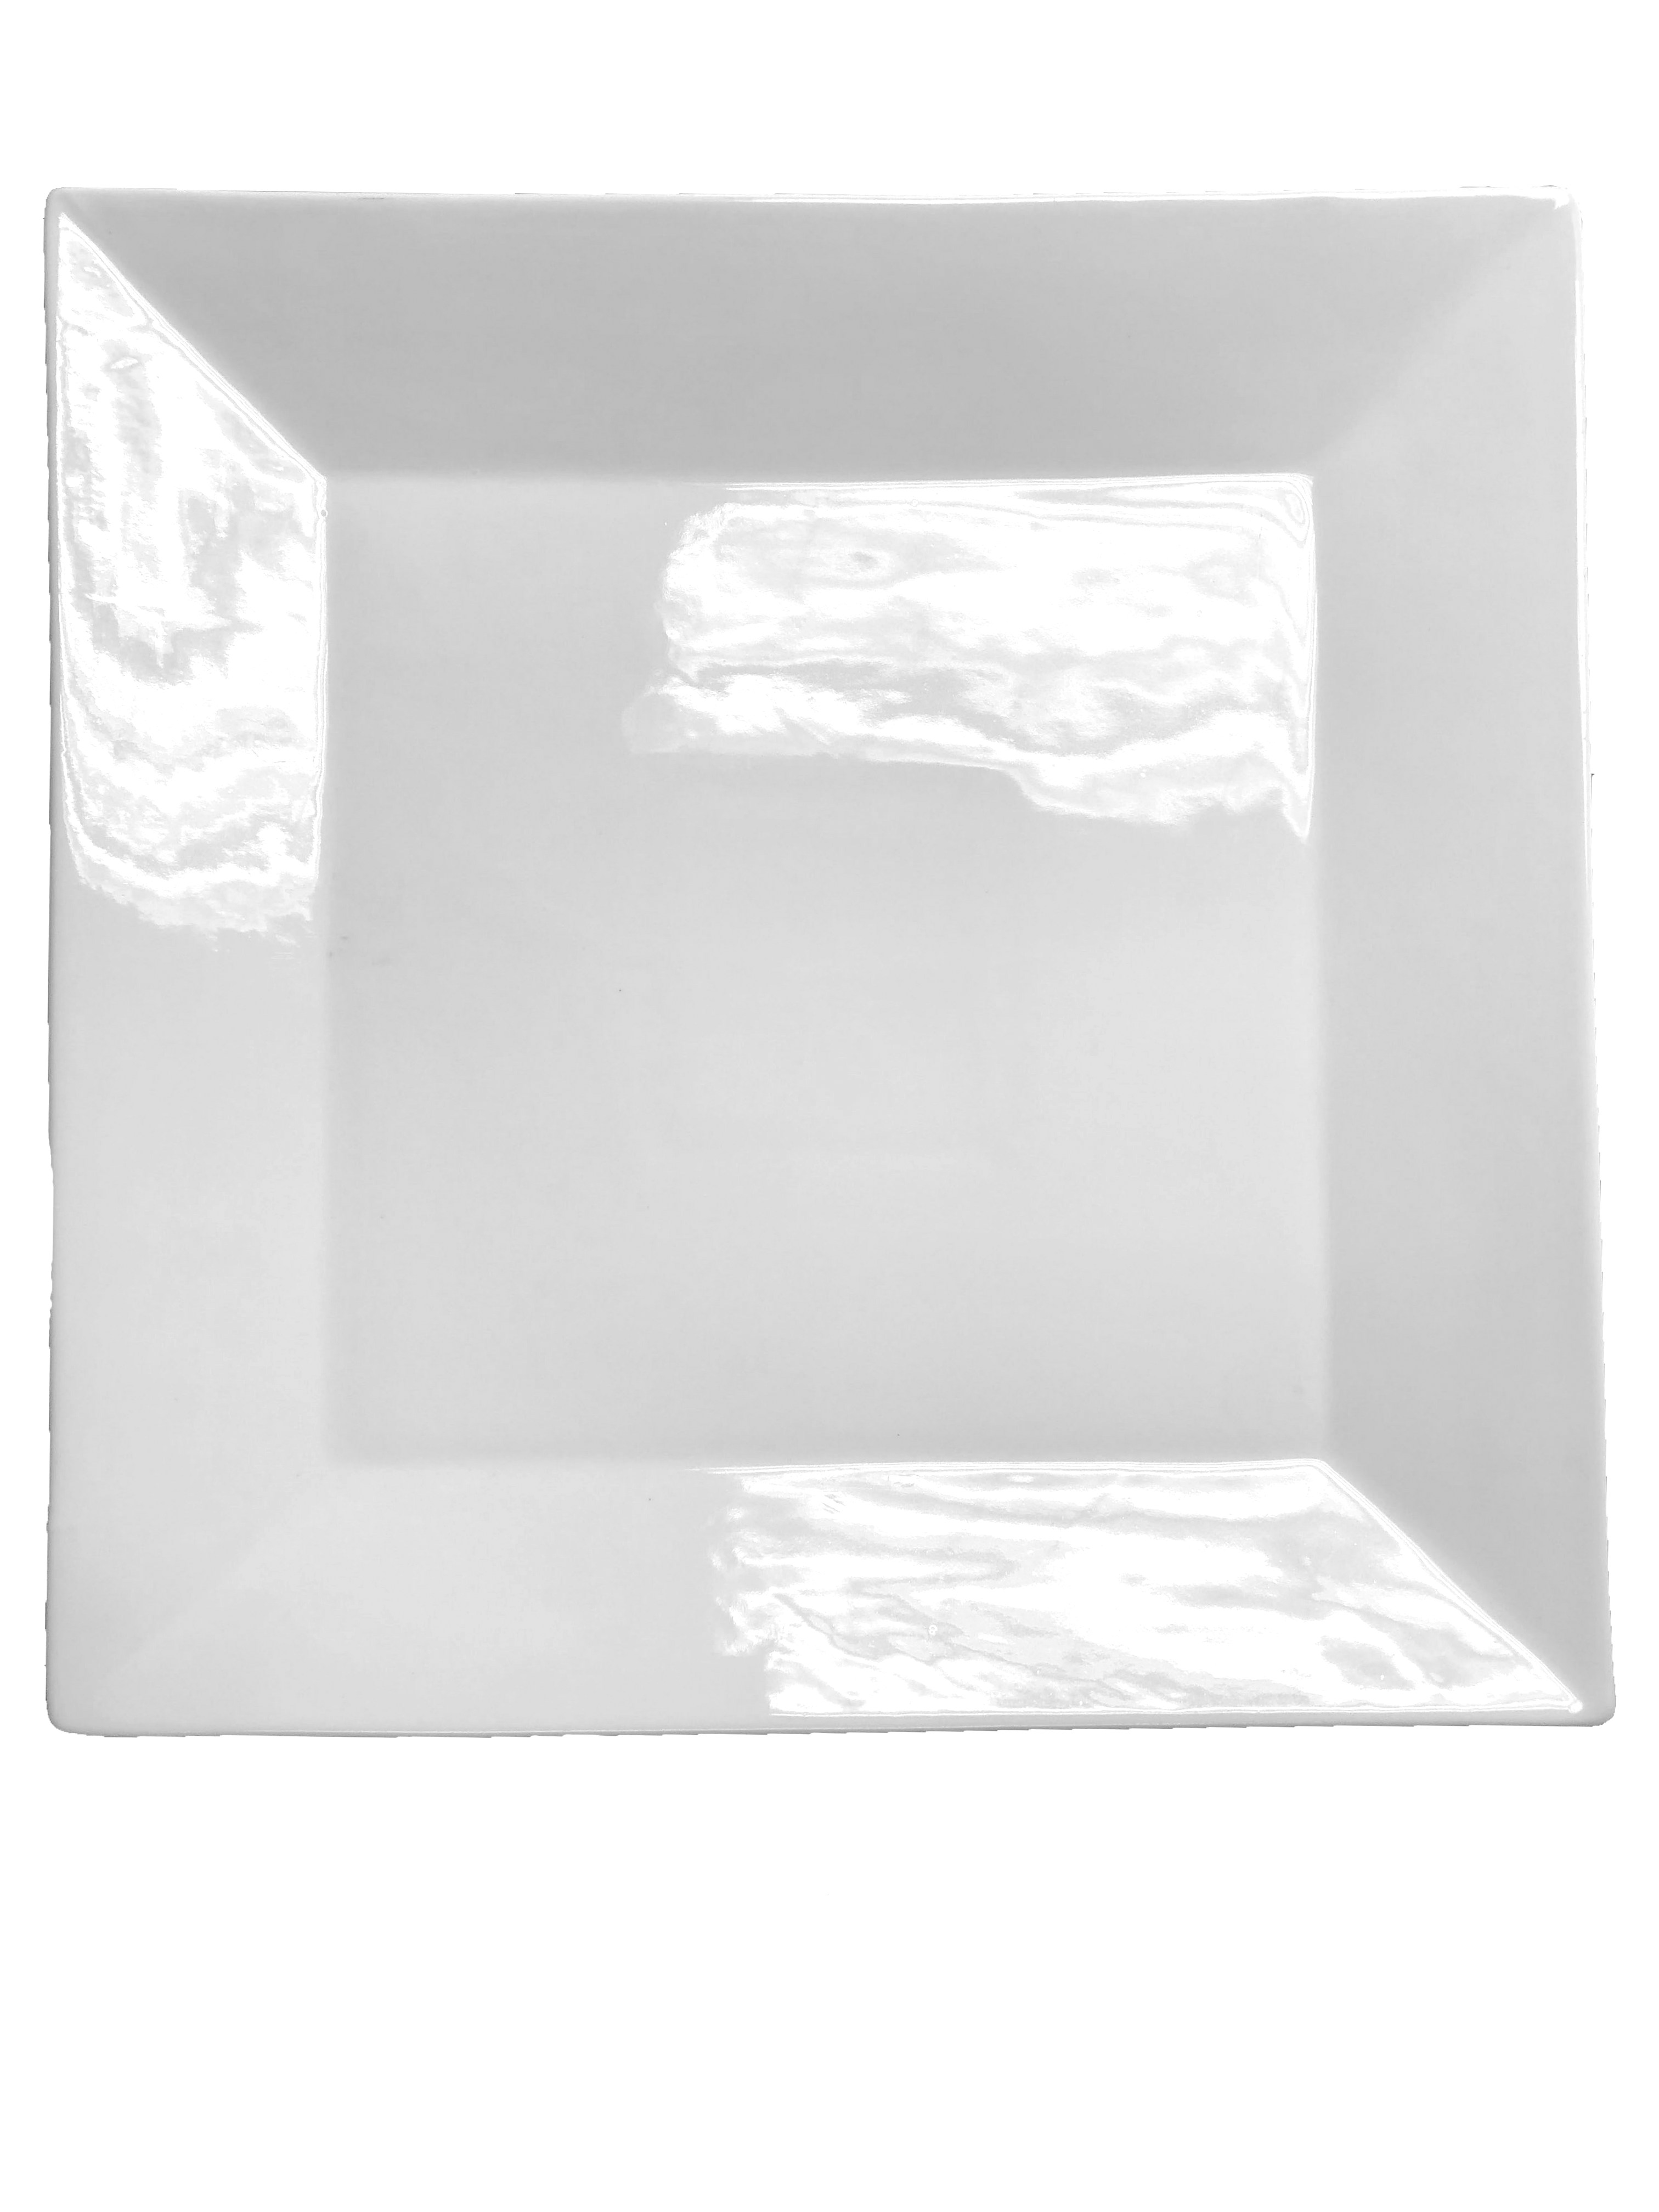 category_D2032 - Square Platter 12